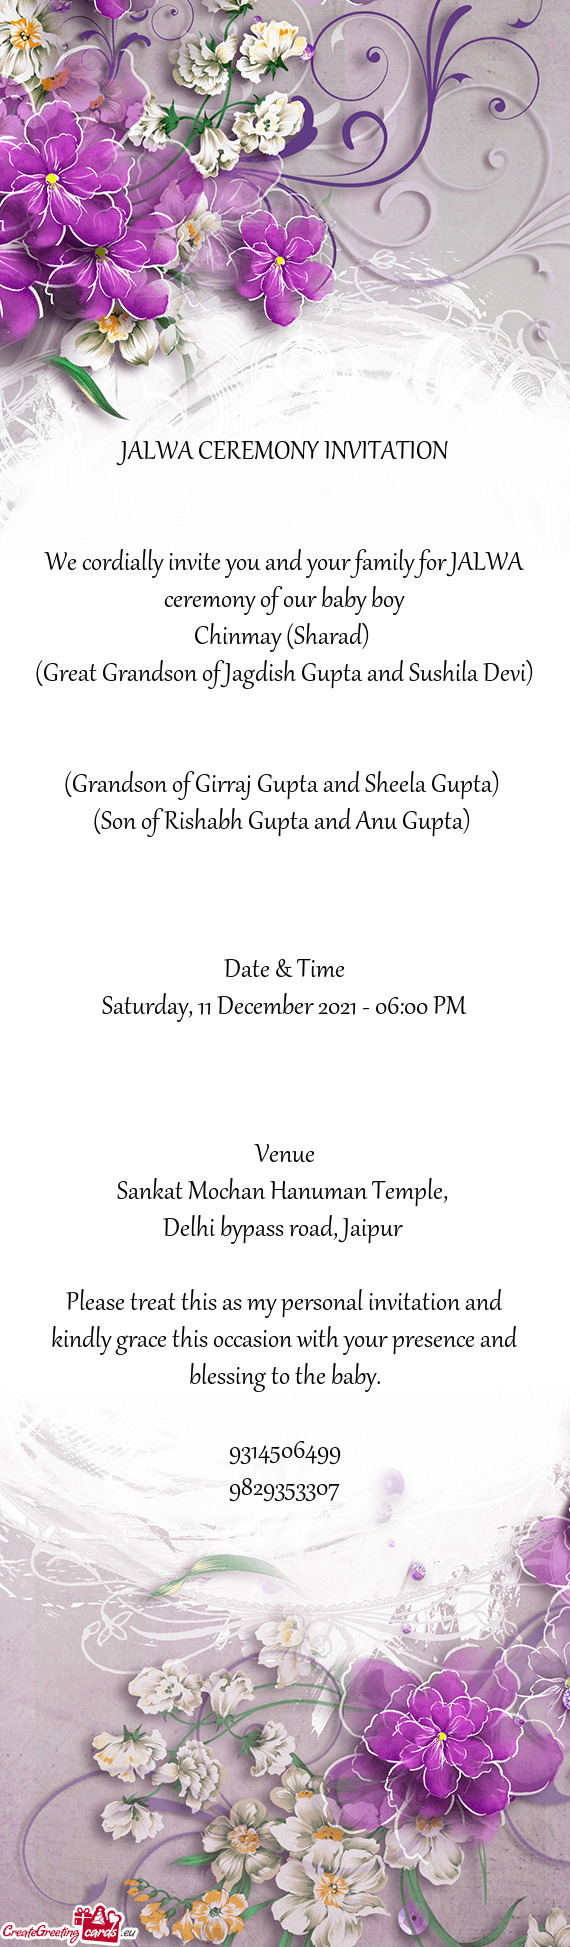 (Great Grandson of Jagdish Gupta and Sushila Devi)